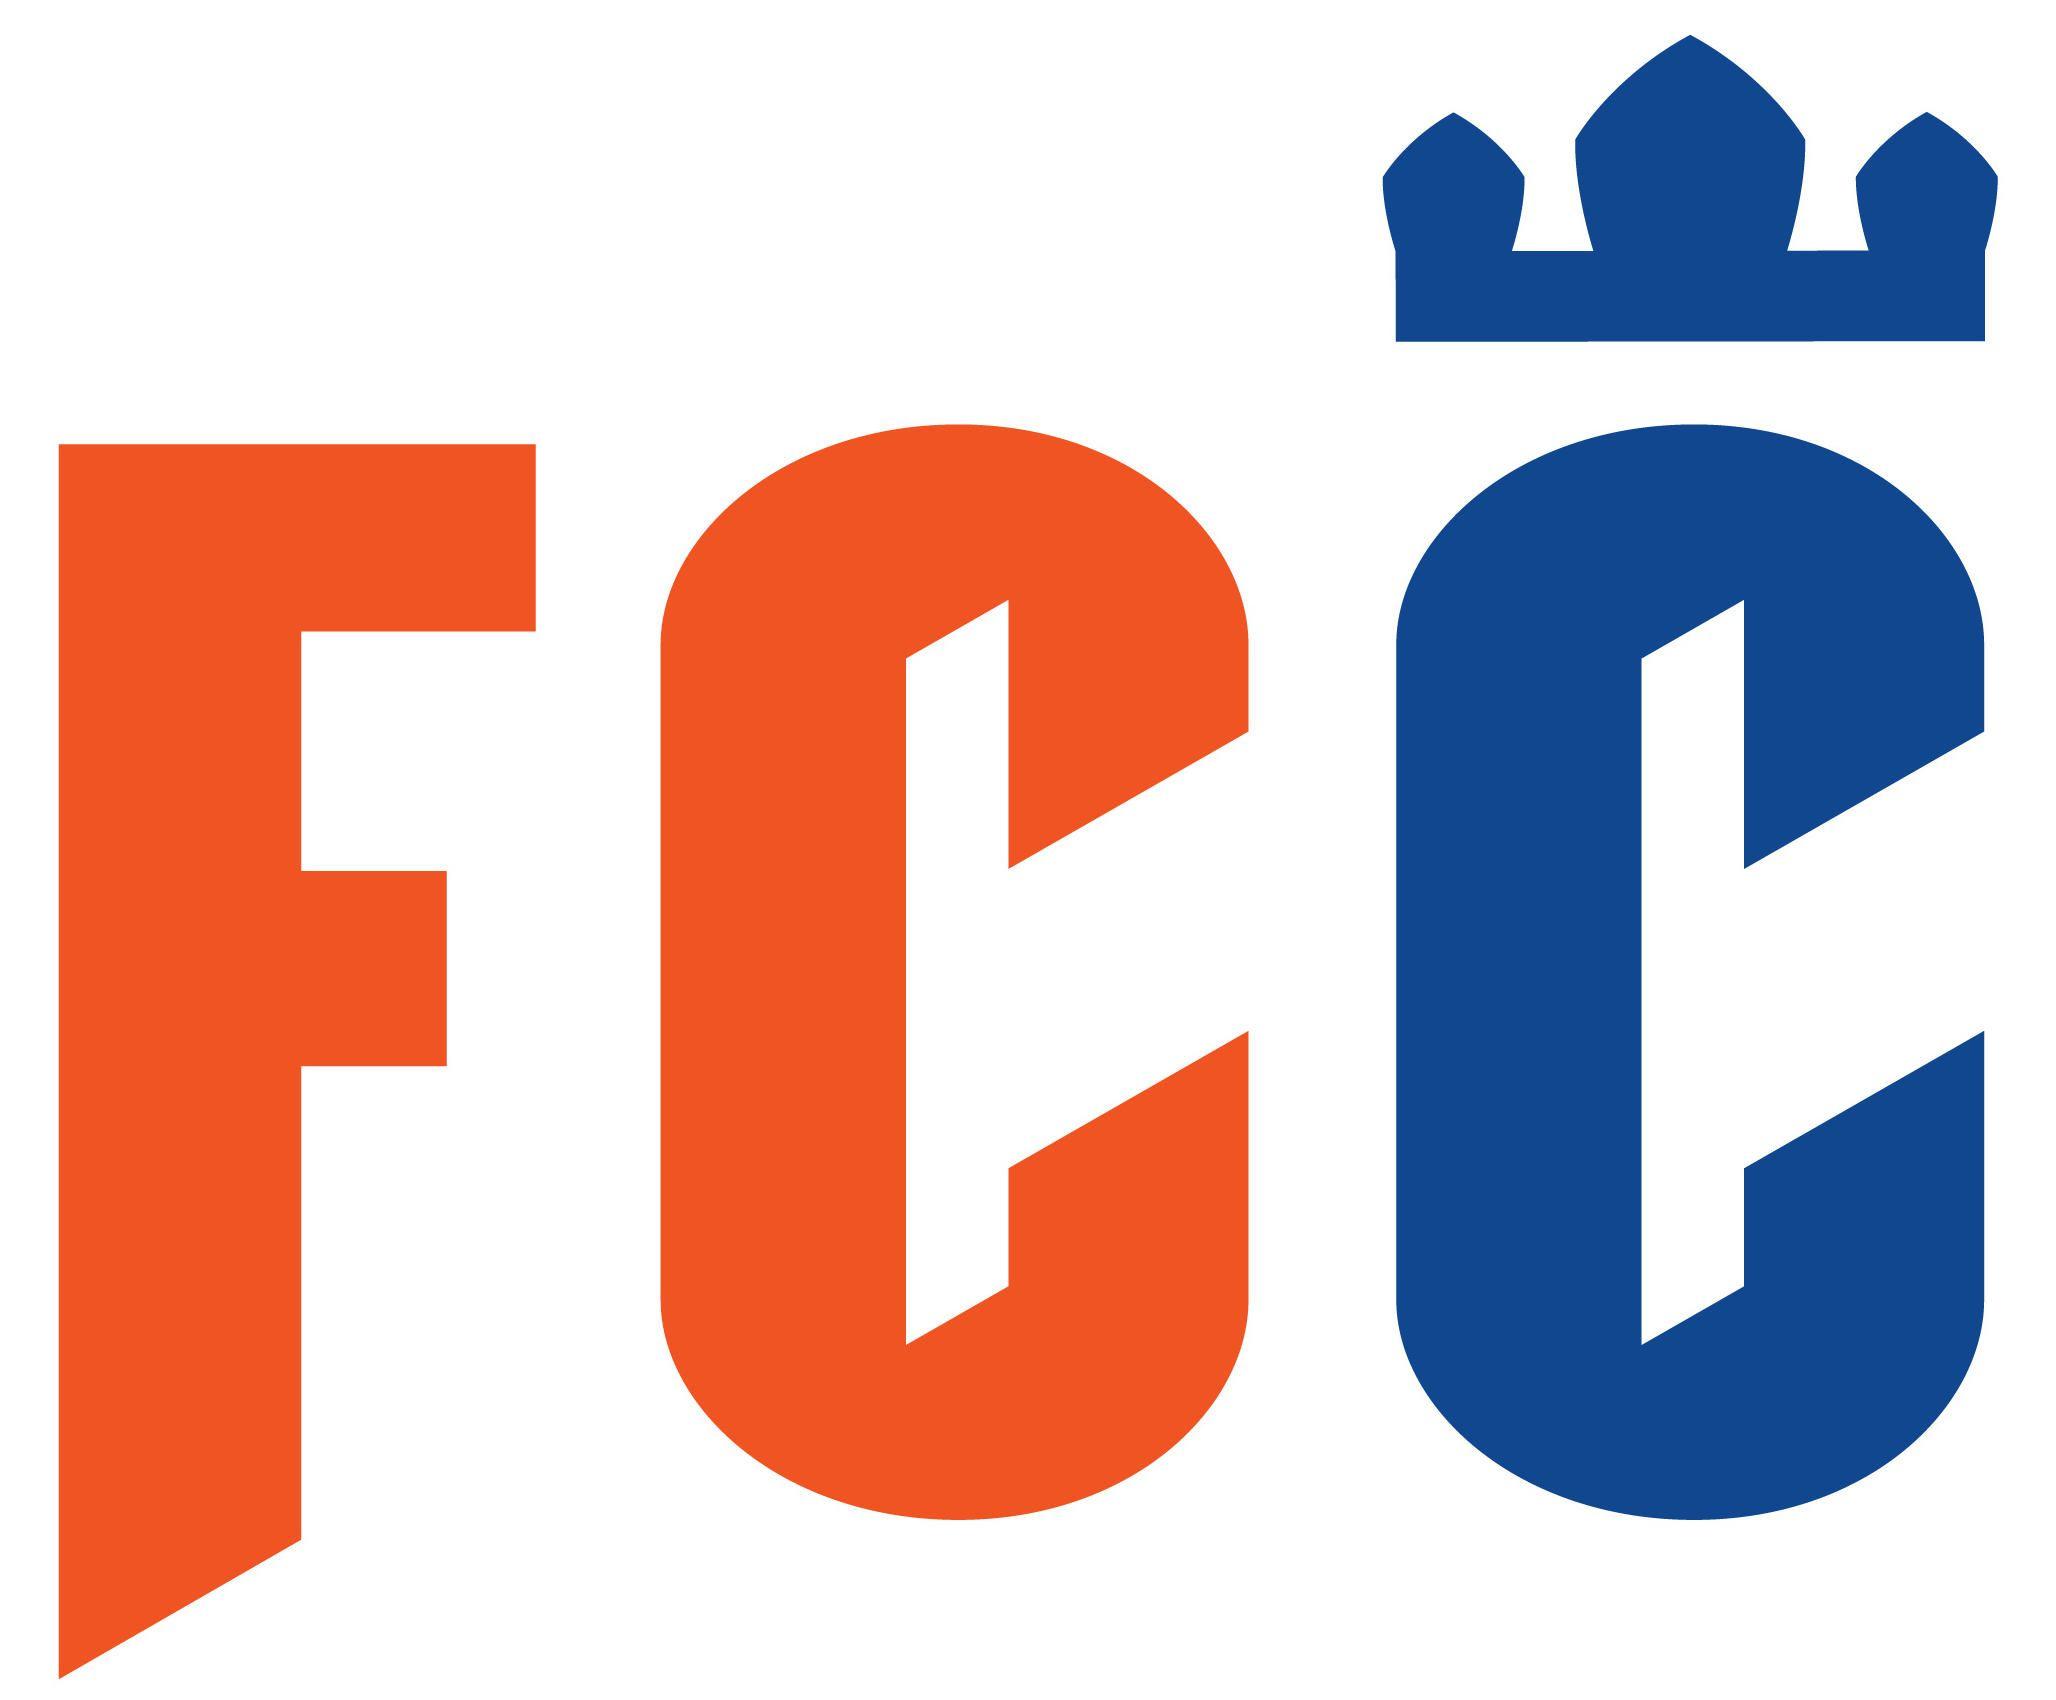 For Red Blue Orange Football Logo - Football Club Cincinnati: Check Out FC Cincinnati's New Branding | WVXU